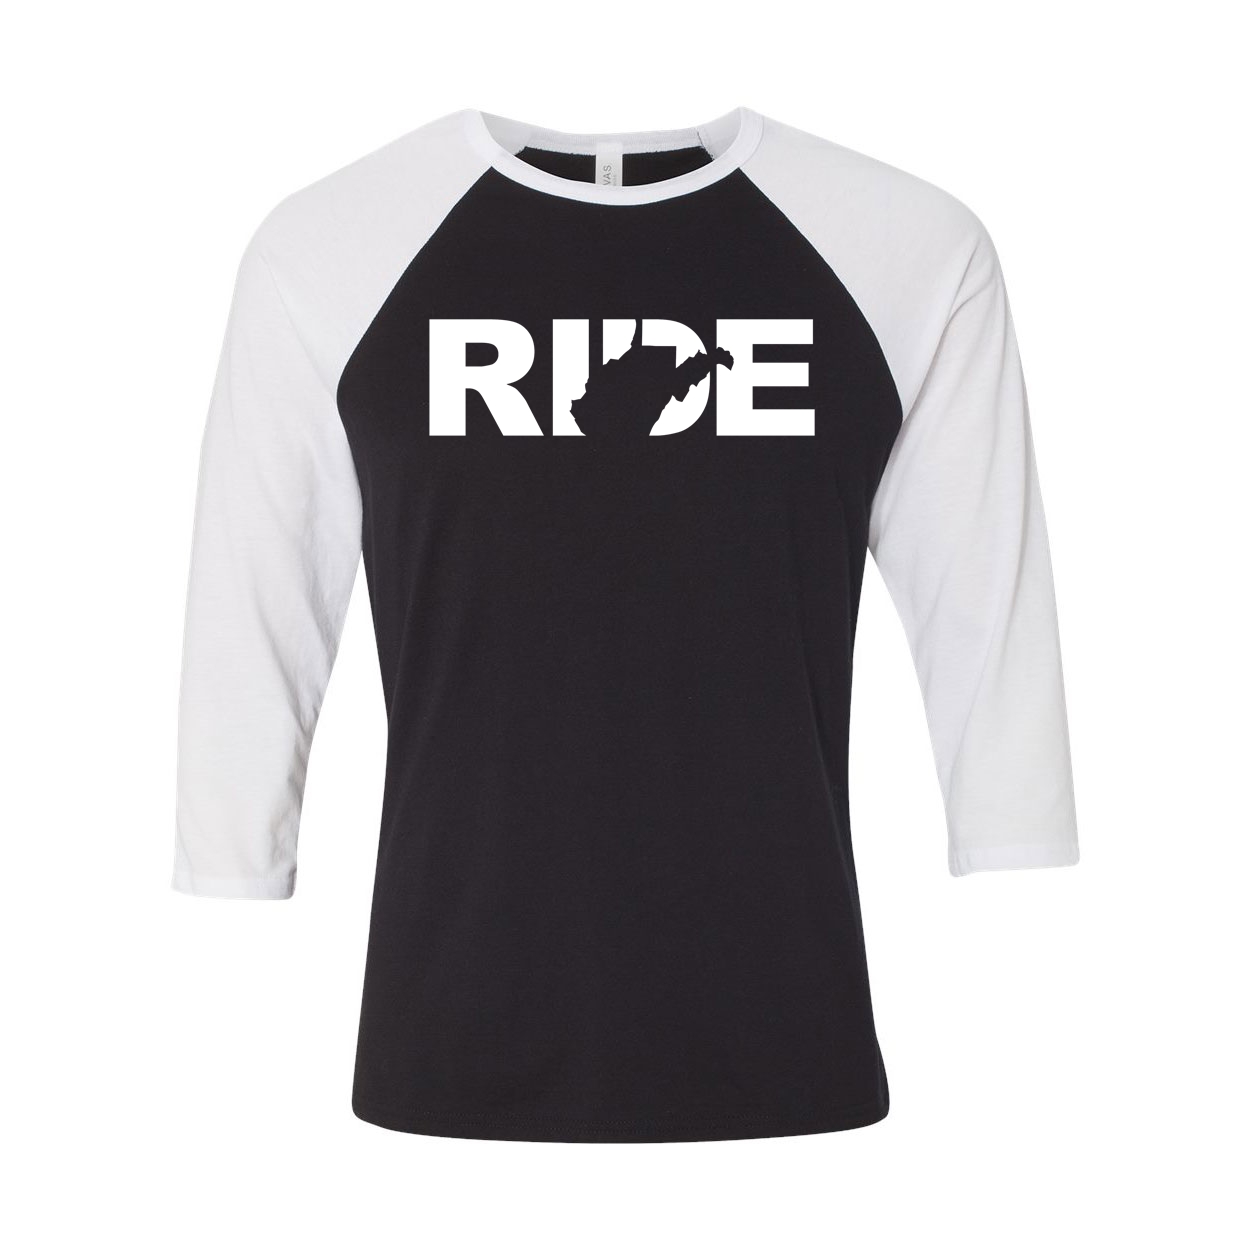 Ride West Virginia Classic Raglan Shirt Black/White (White Logo)